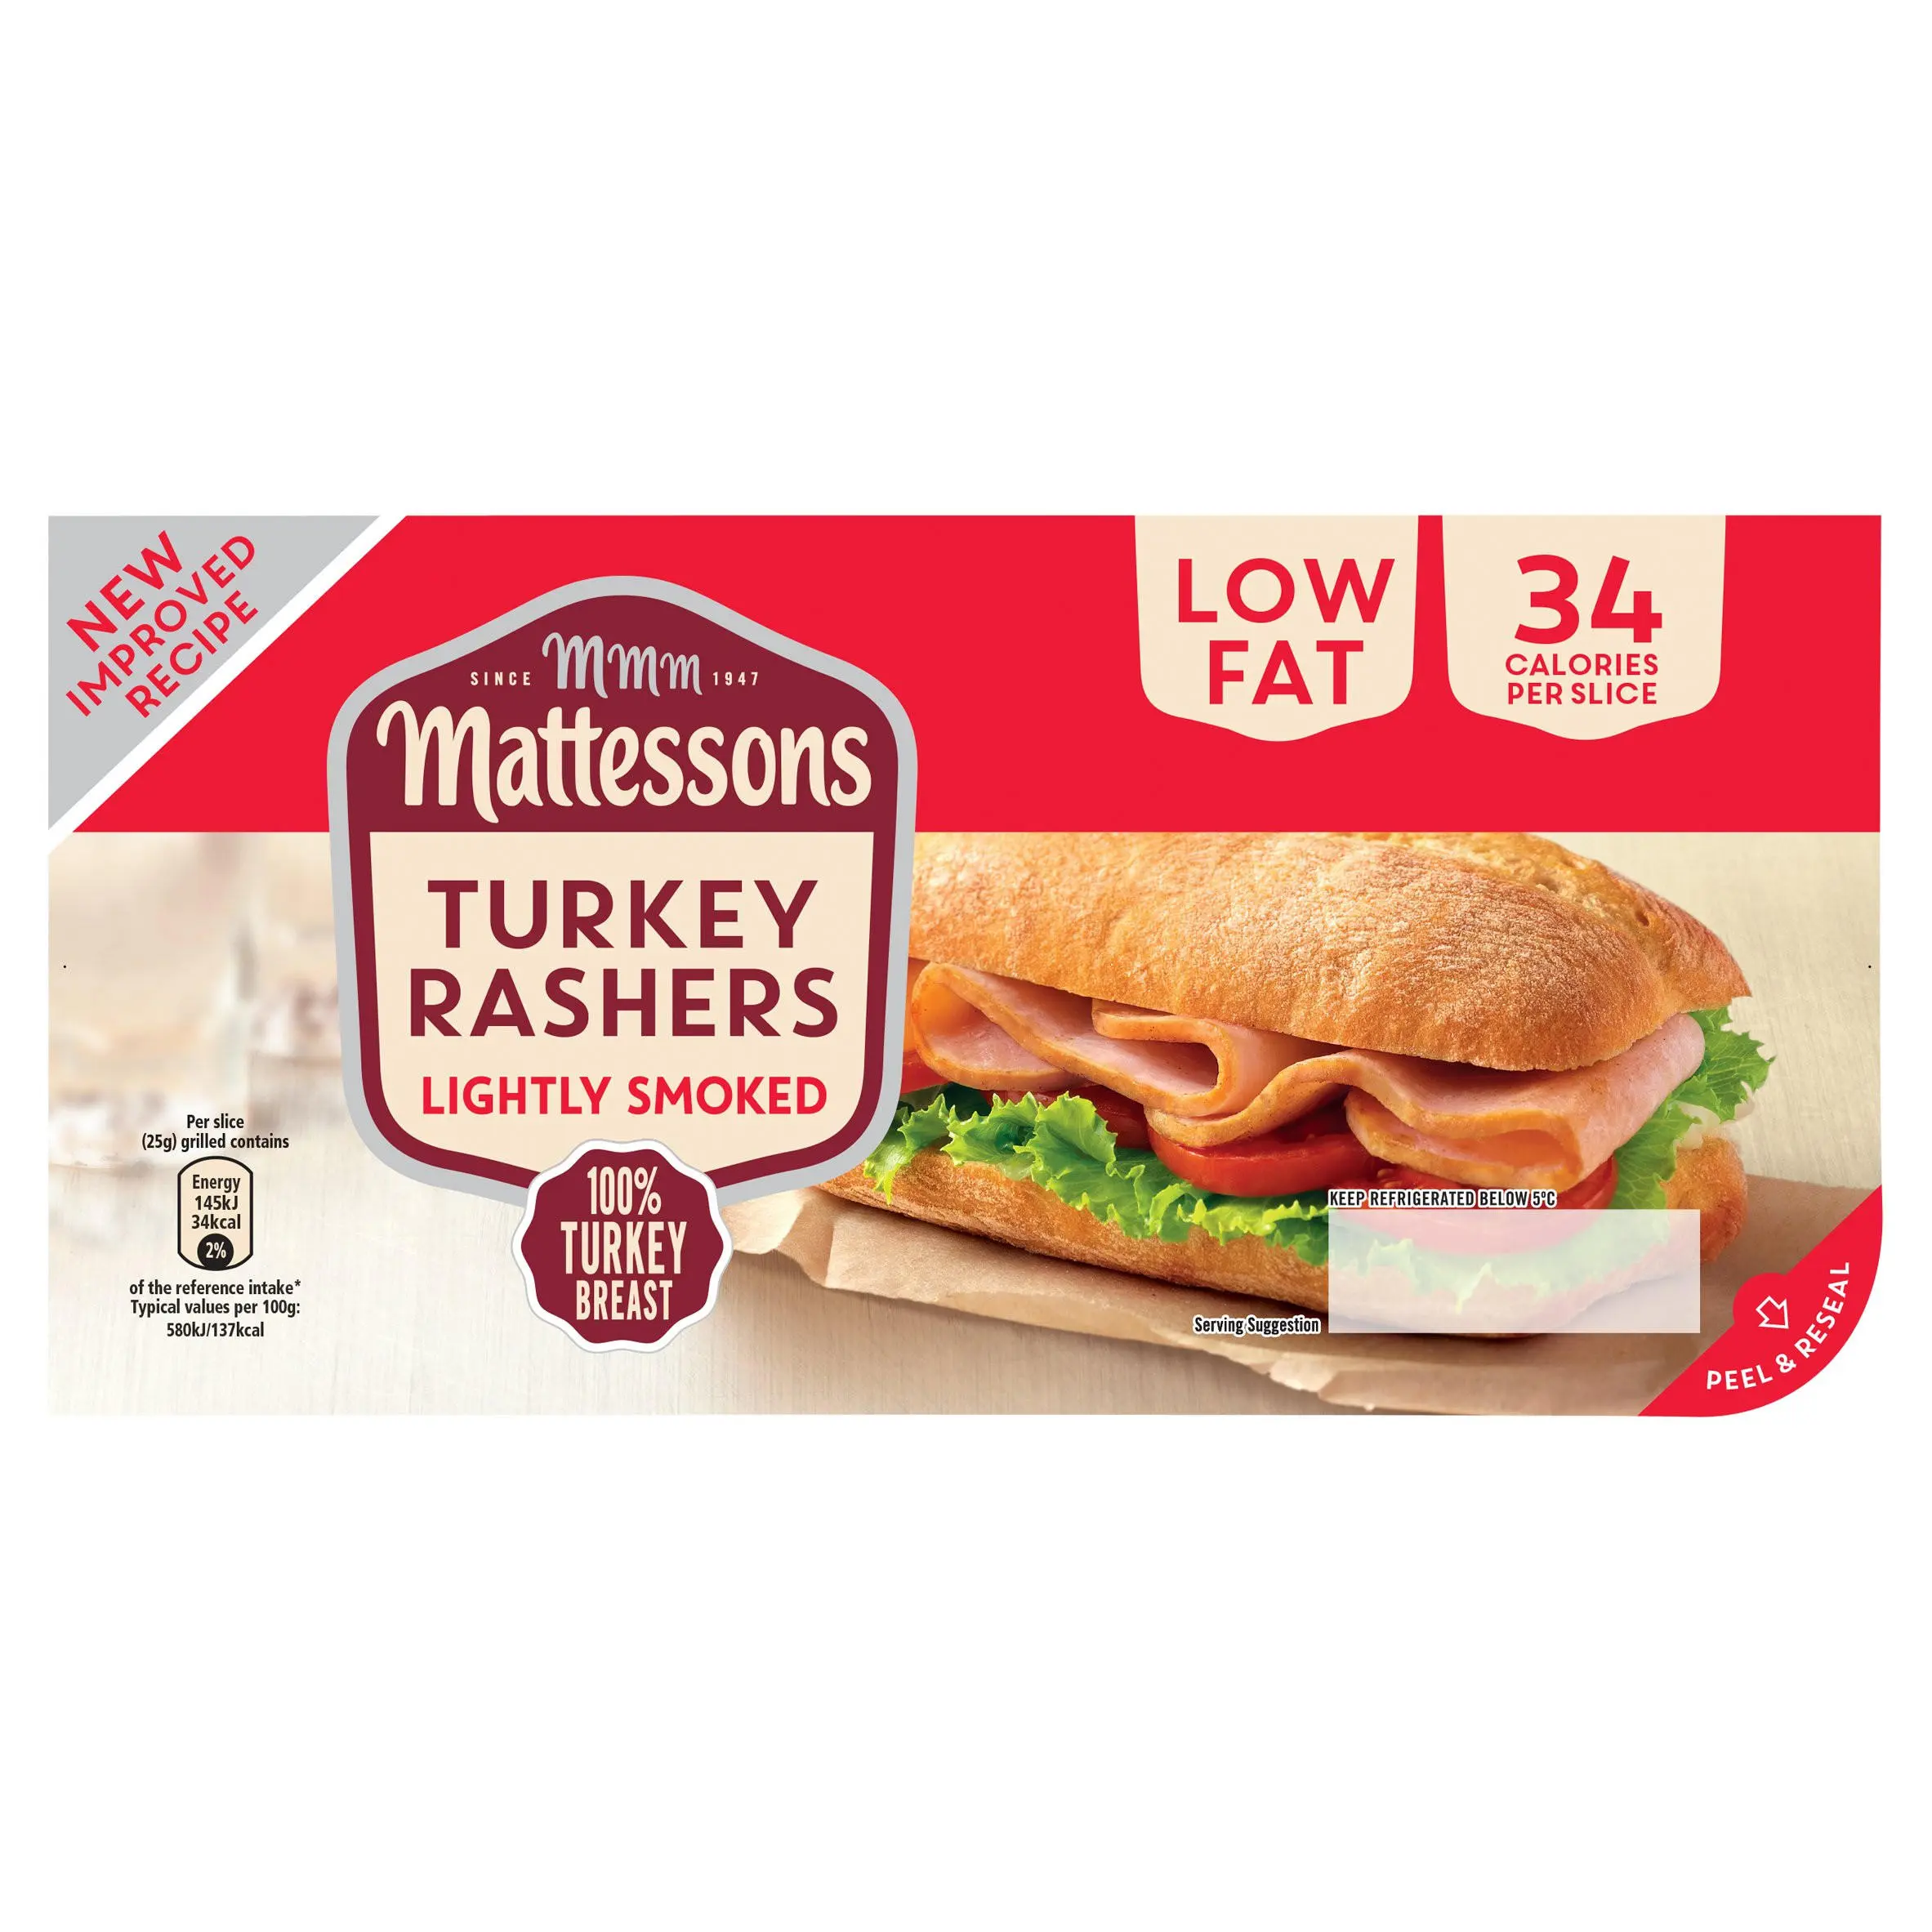 mattessons lightly smoked turkey rashers - Do you have to cook Mattessons turkey rashers